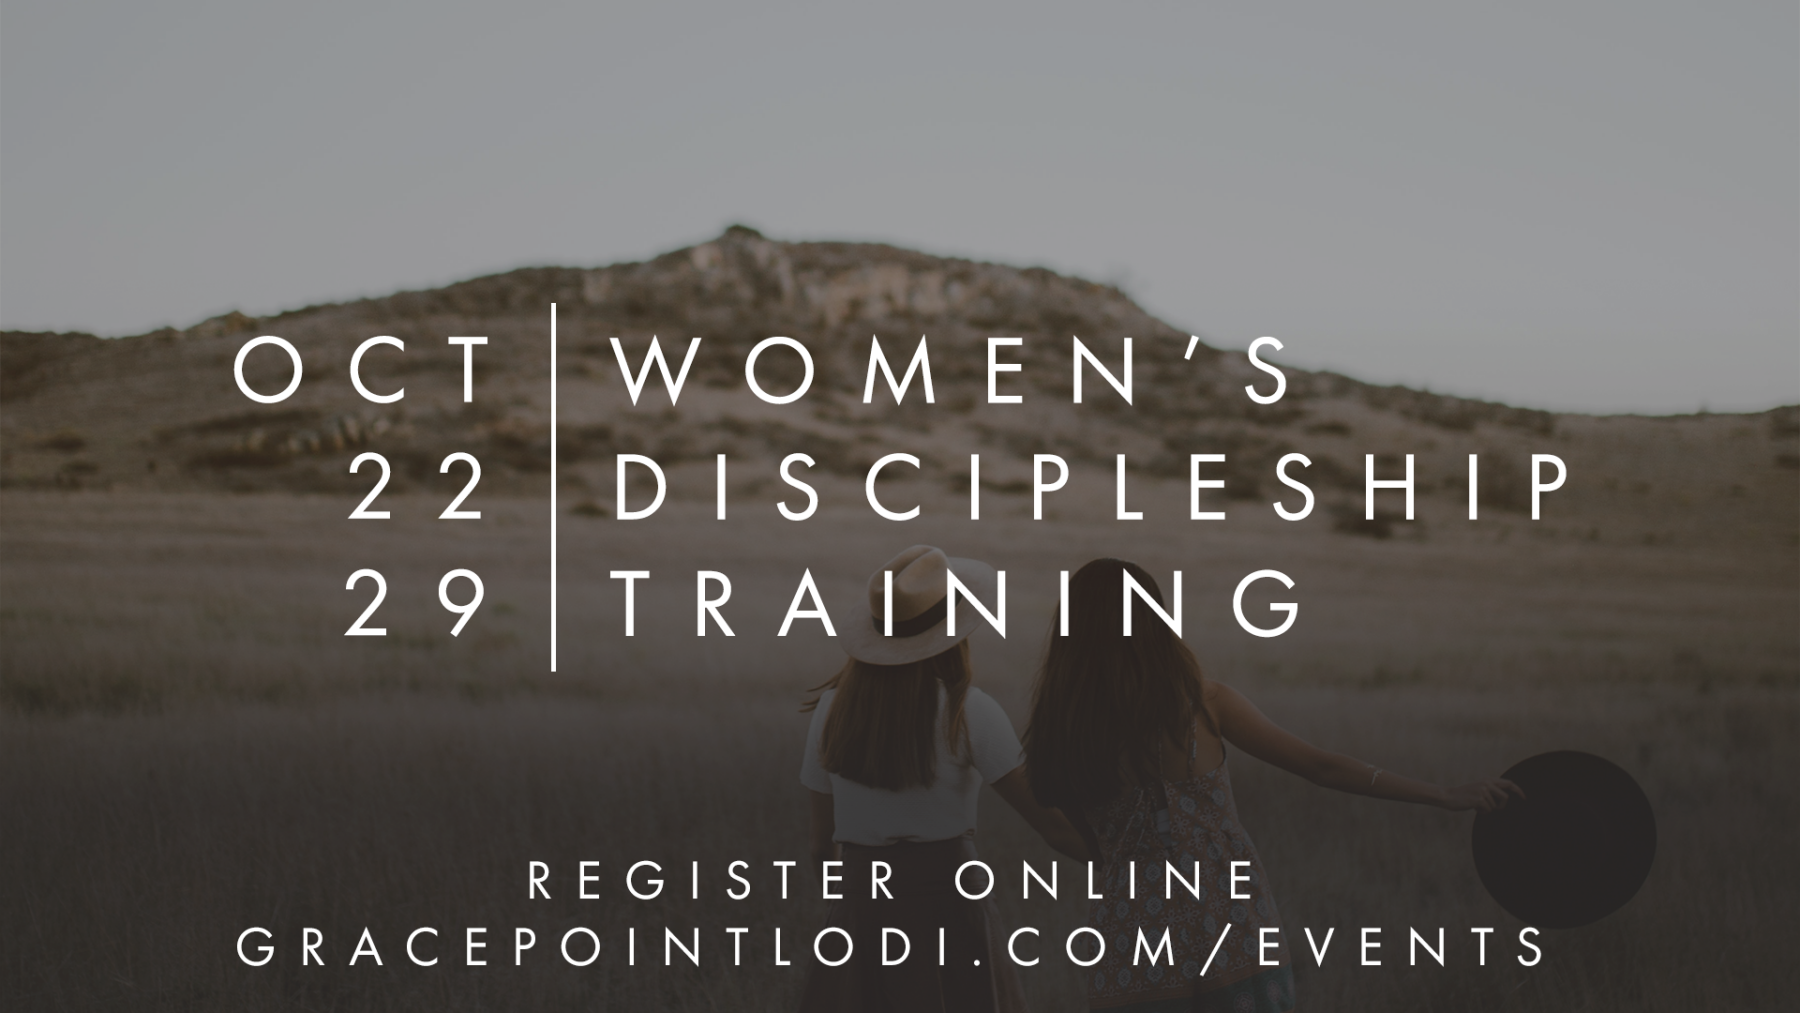 Women's Discipleship Training